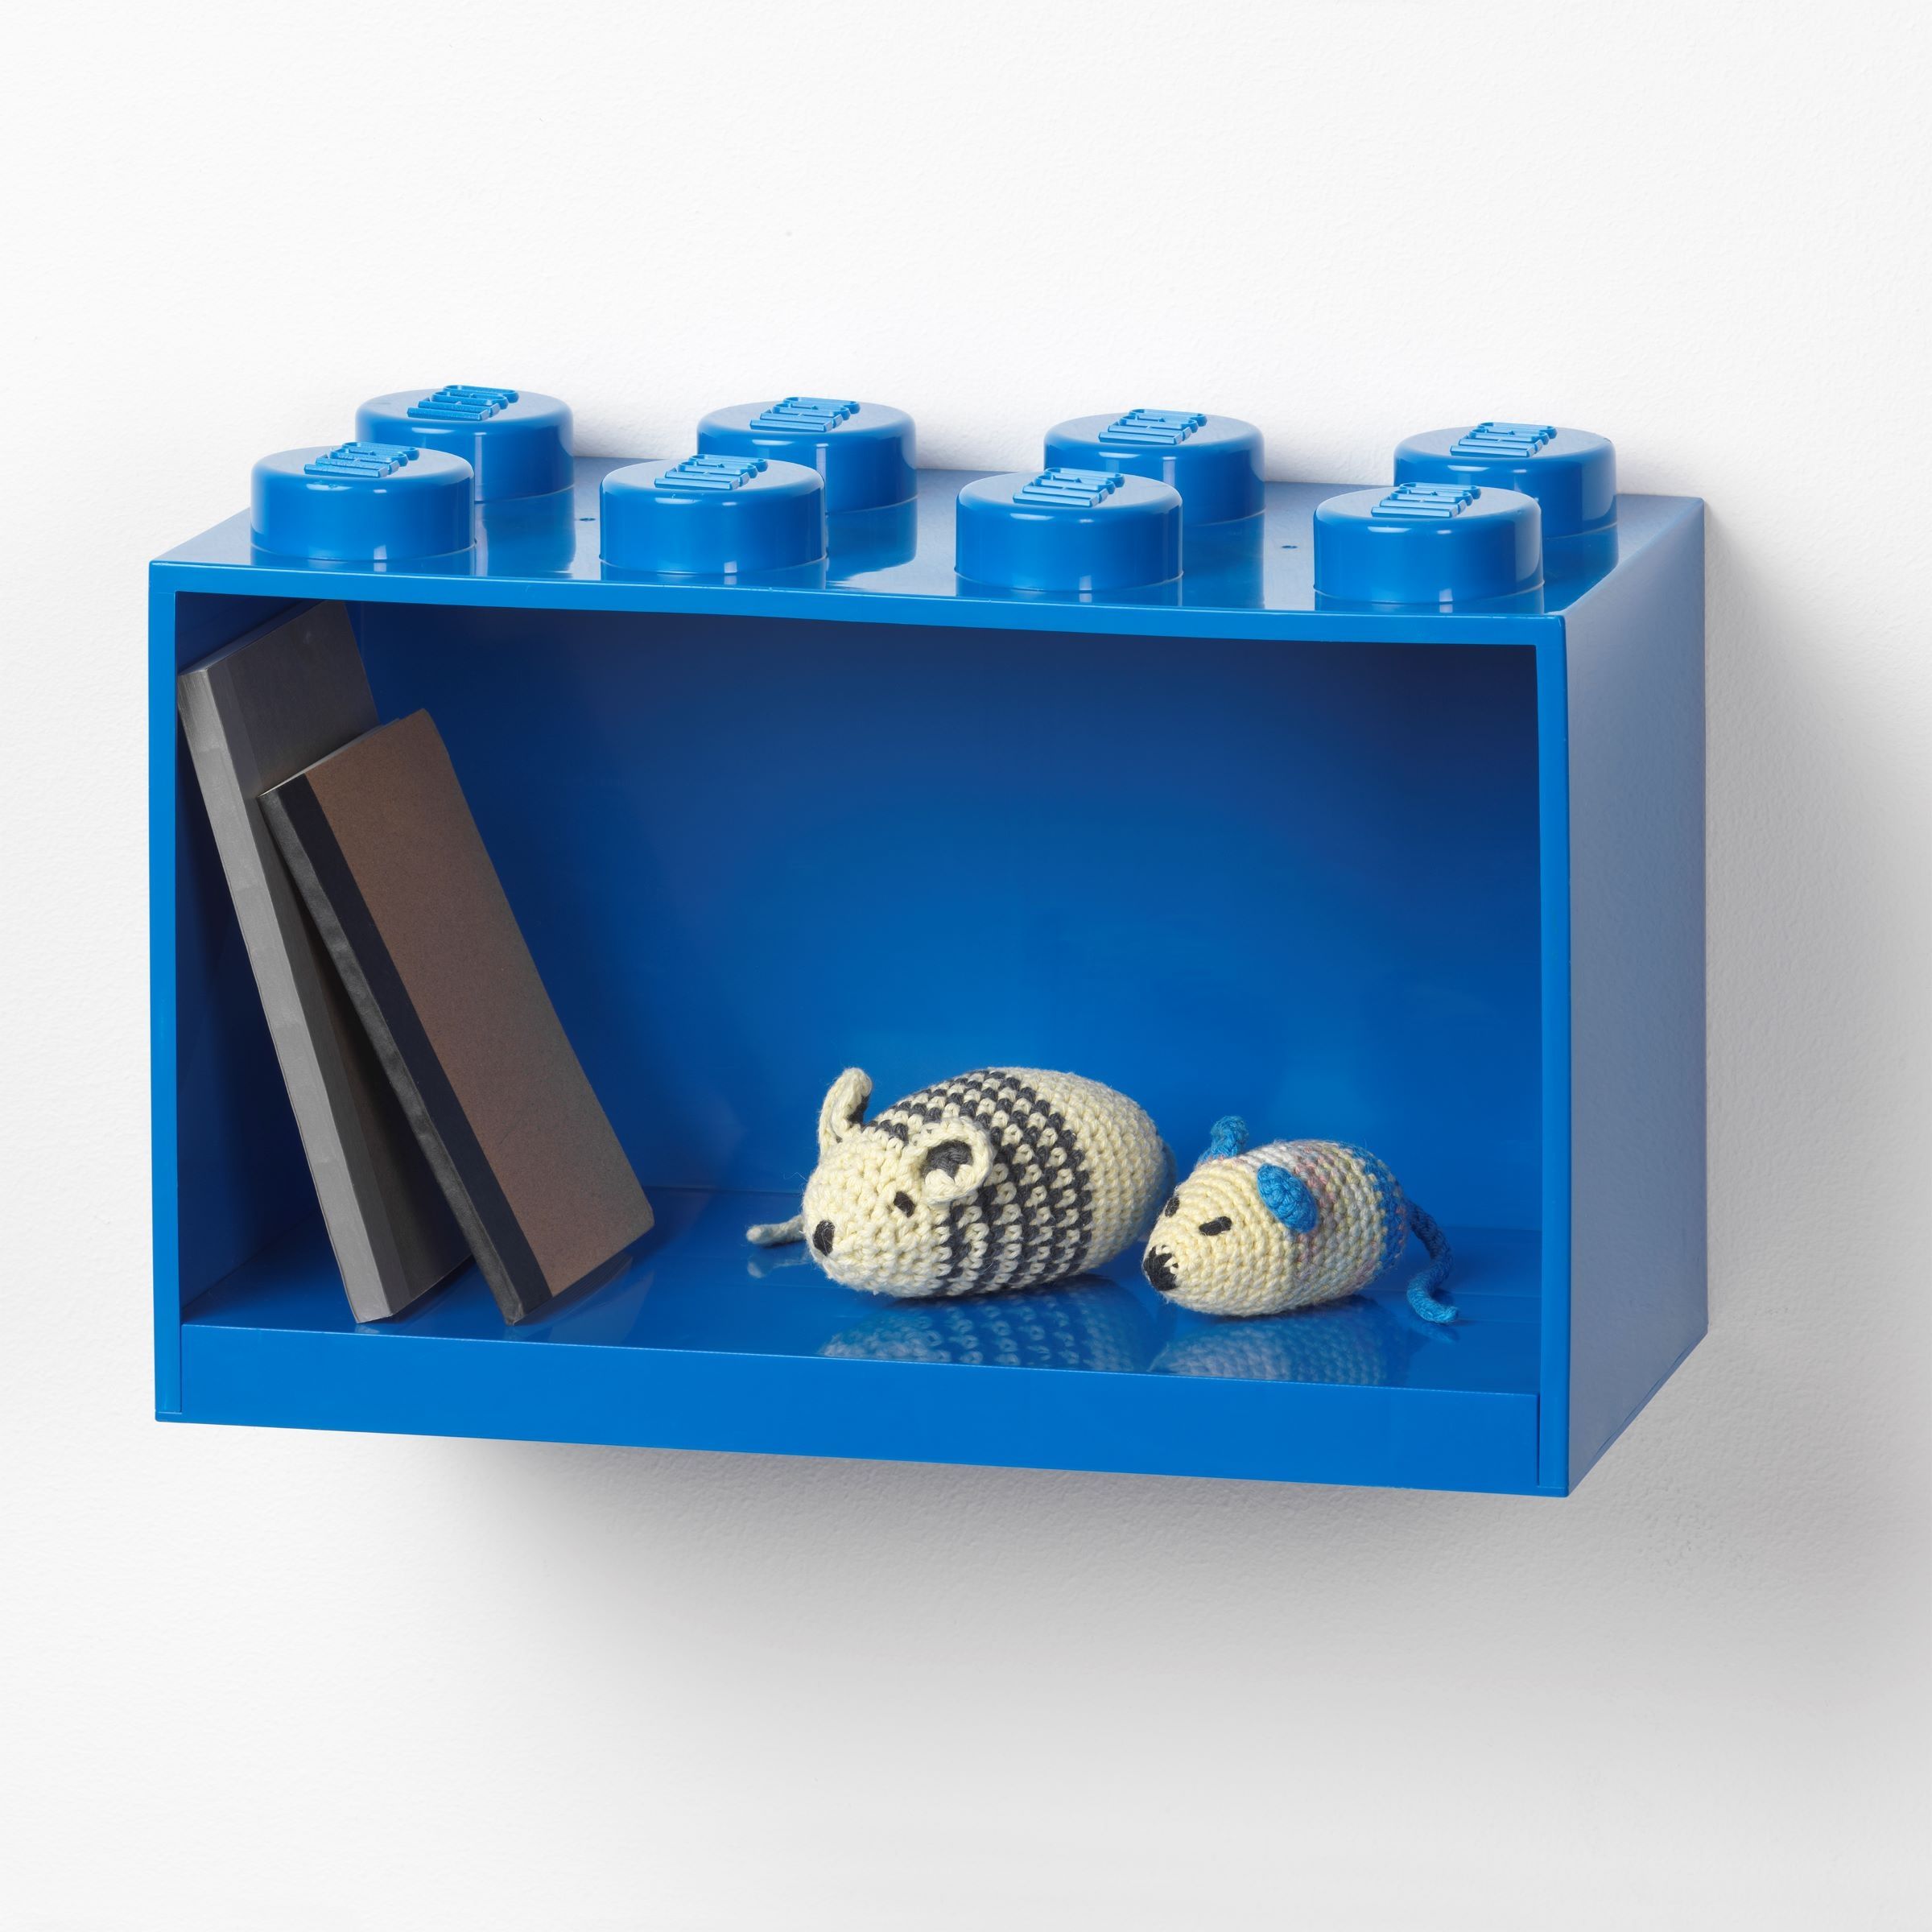 LEGO Gear 5007285 Steinregal mit 8 Noppen in Blau LEGO_5007285_alt1.jpg